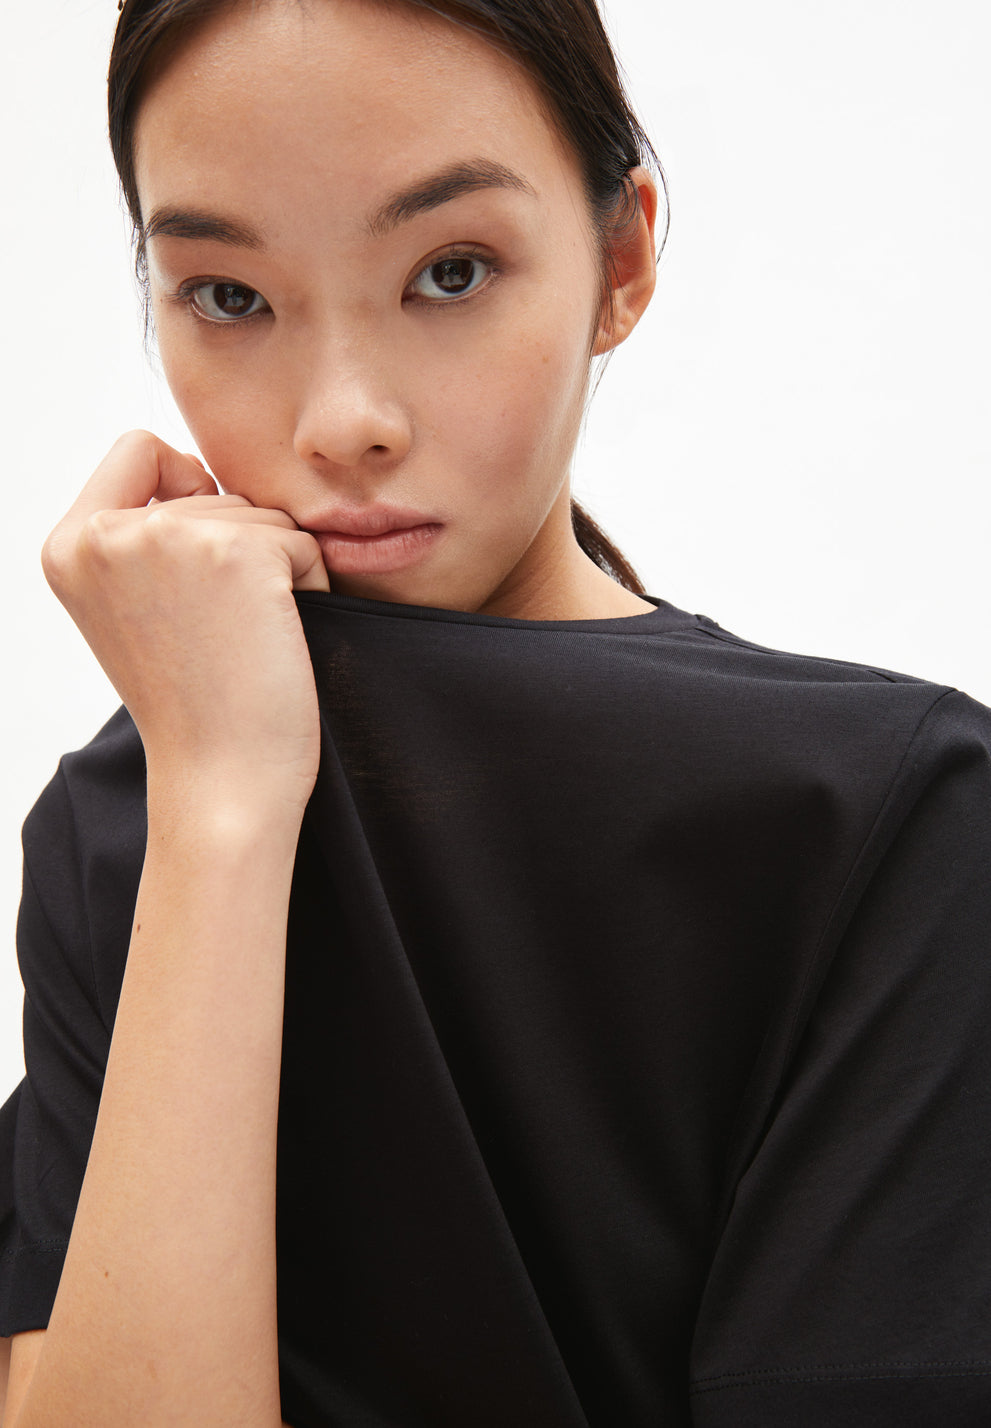 Feliaa Black Jersey Short Sleeve Dress In Organic Cotton